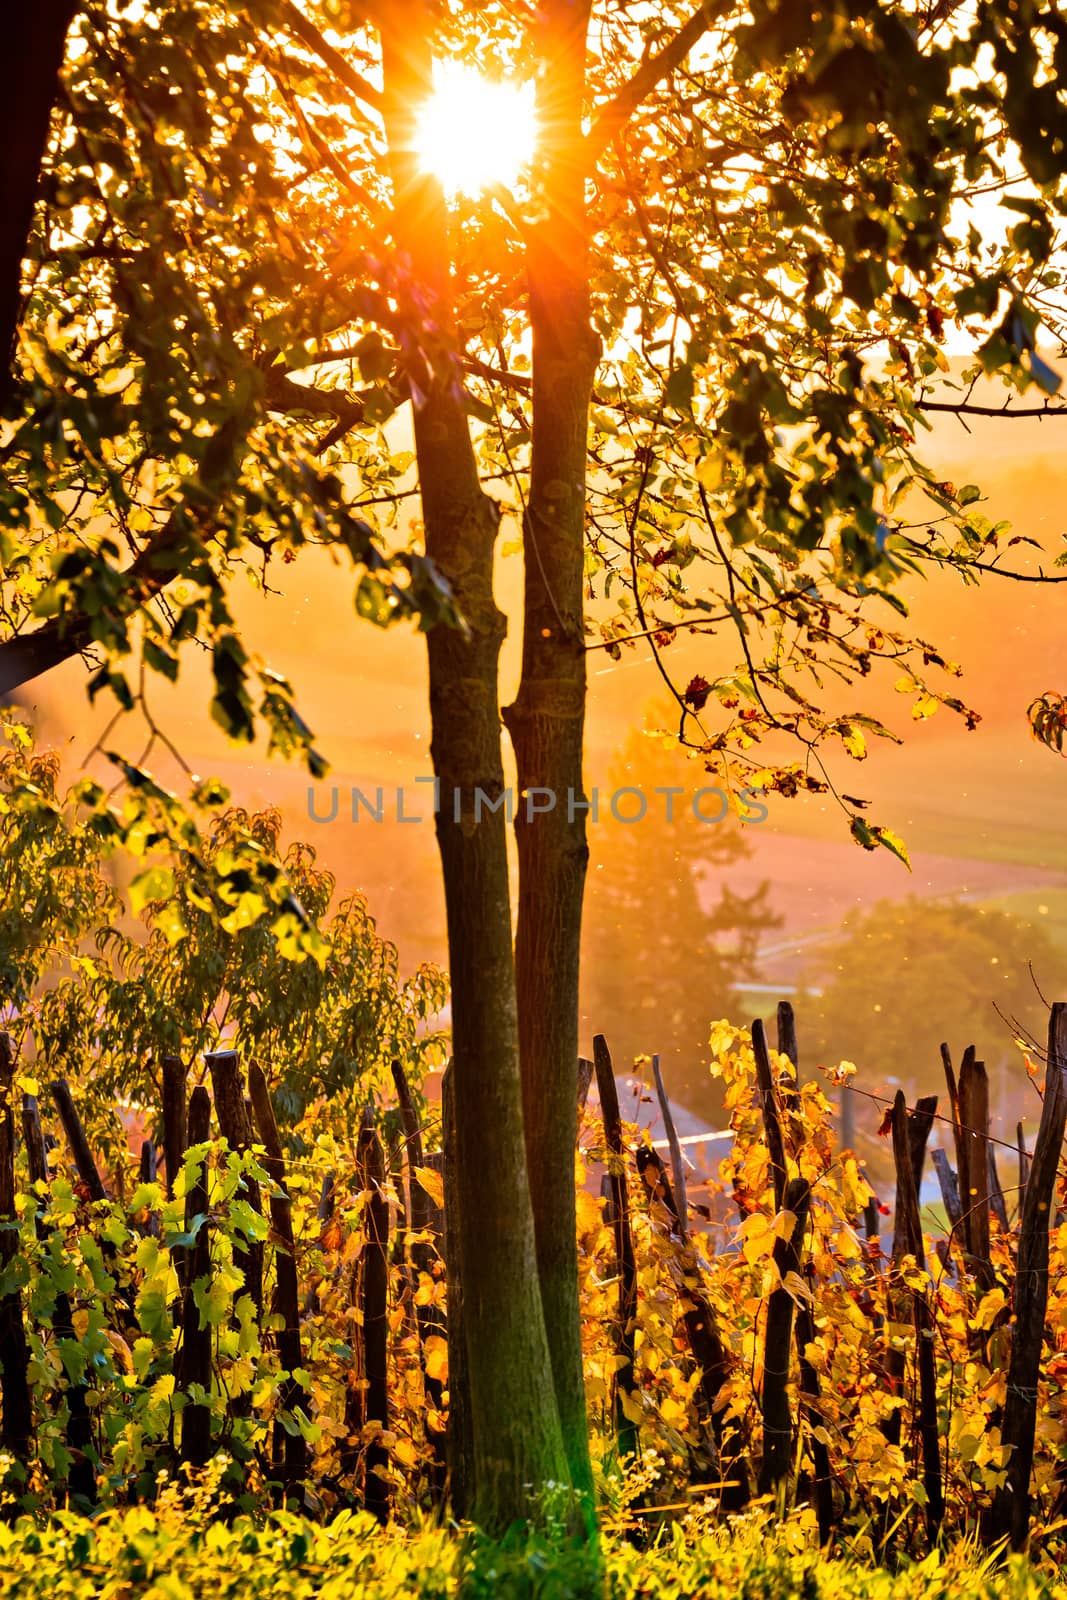 Sunset in vineyard through tree vertical view by xbrchx